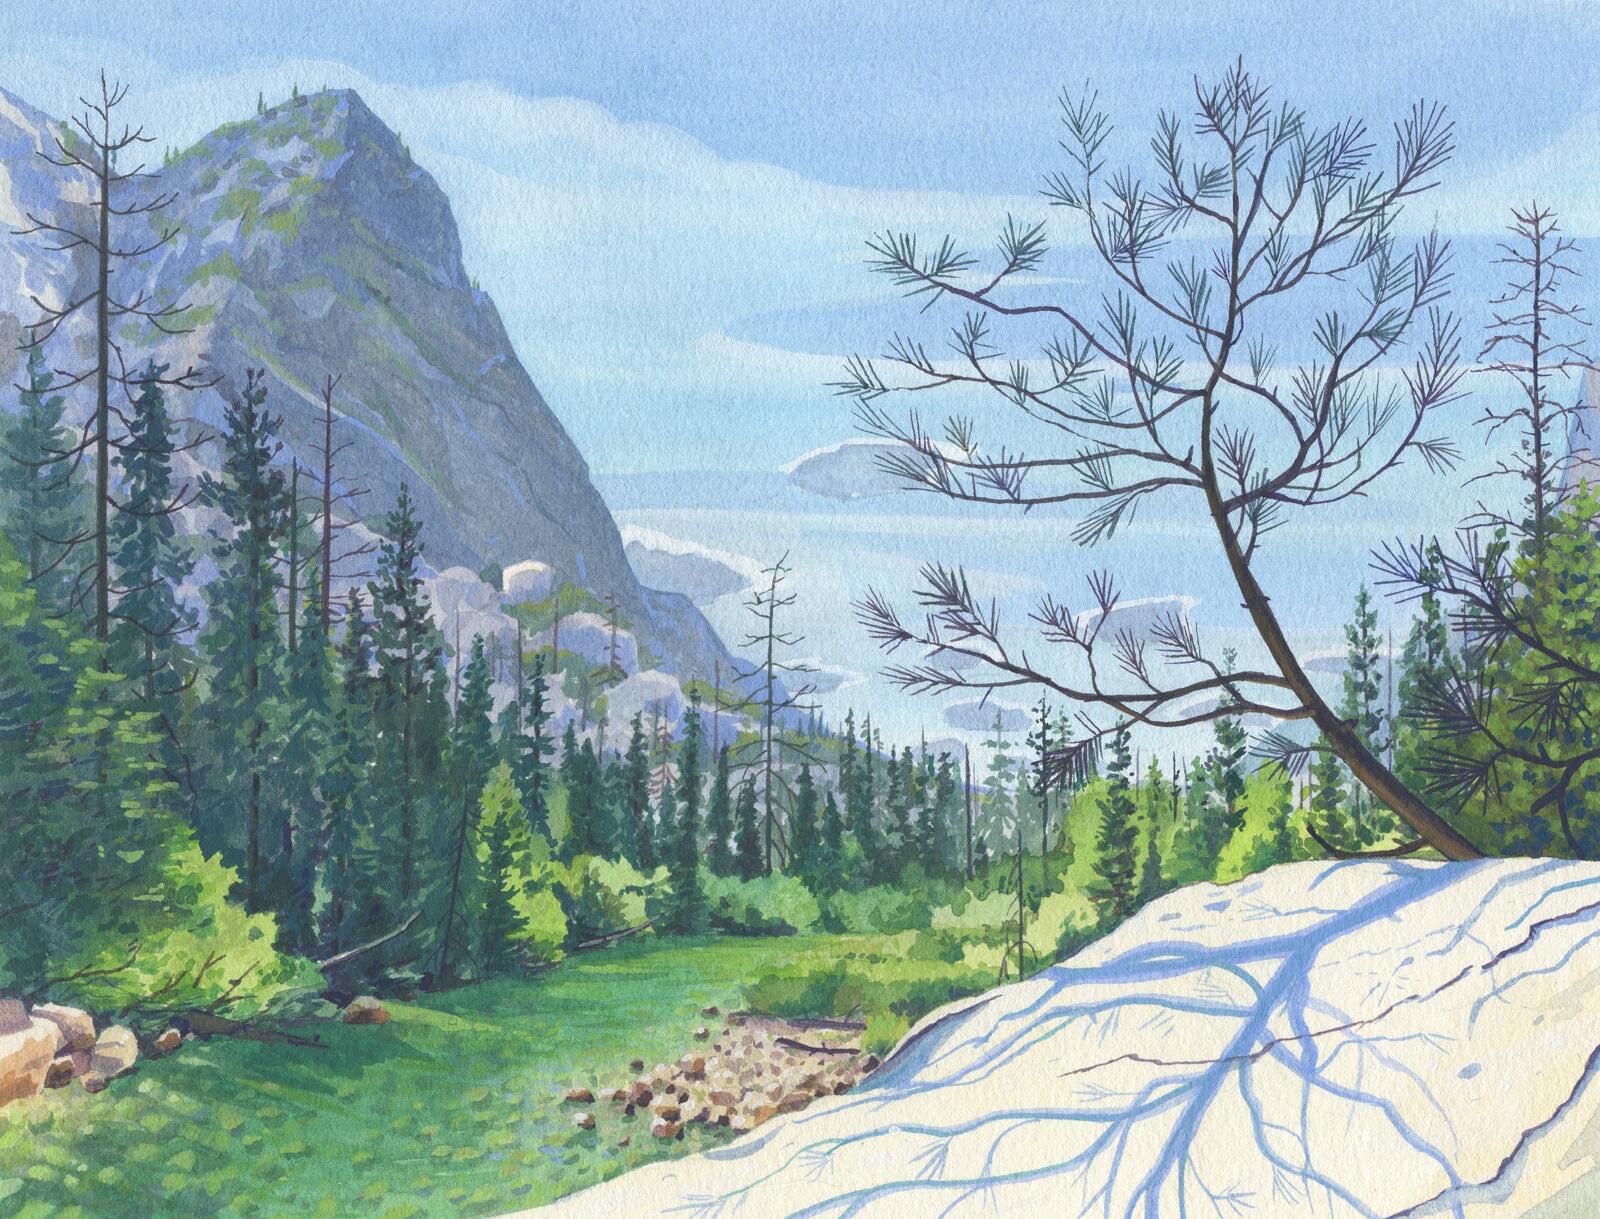 Creative Illustration and Innovative Art: Forest with Colorful Nature Land  Stock Illustration - Illustration of fantastic, artwork: 277953977